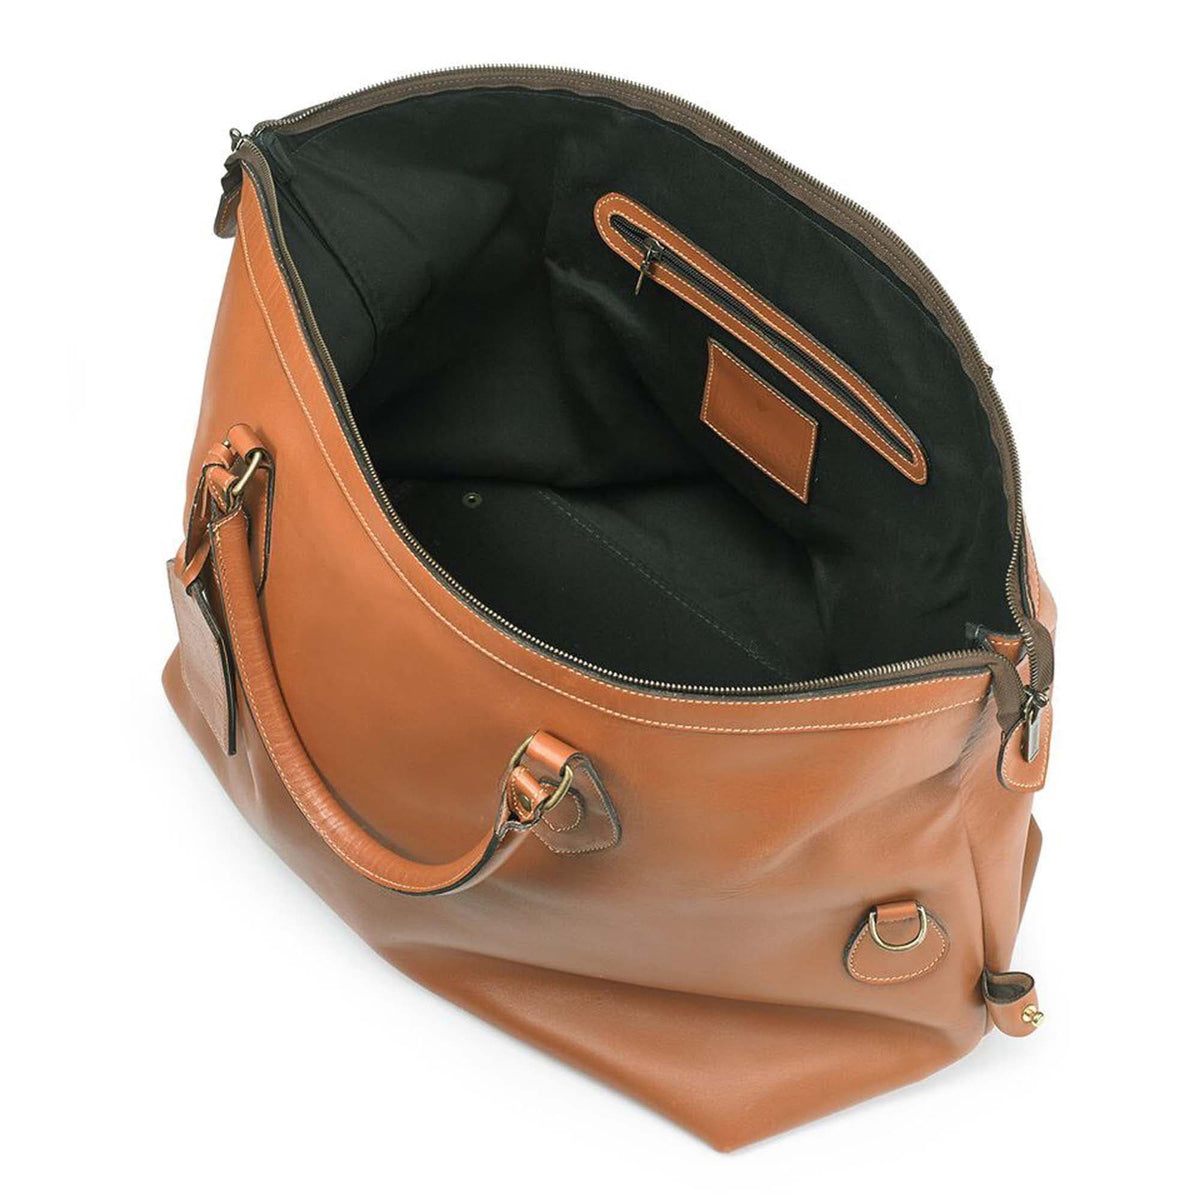 Tusting Travel Medium Explorer Leather Tote Bag